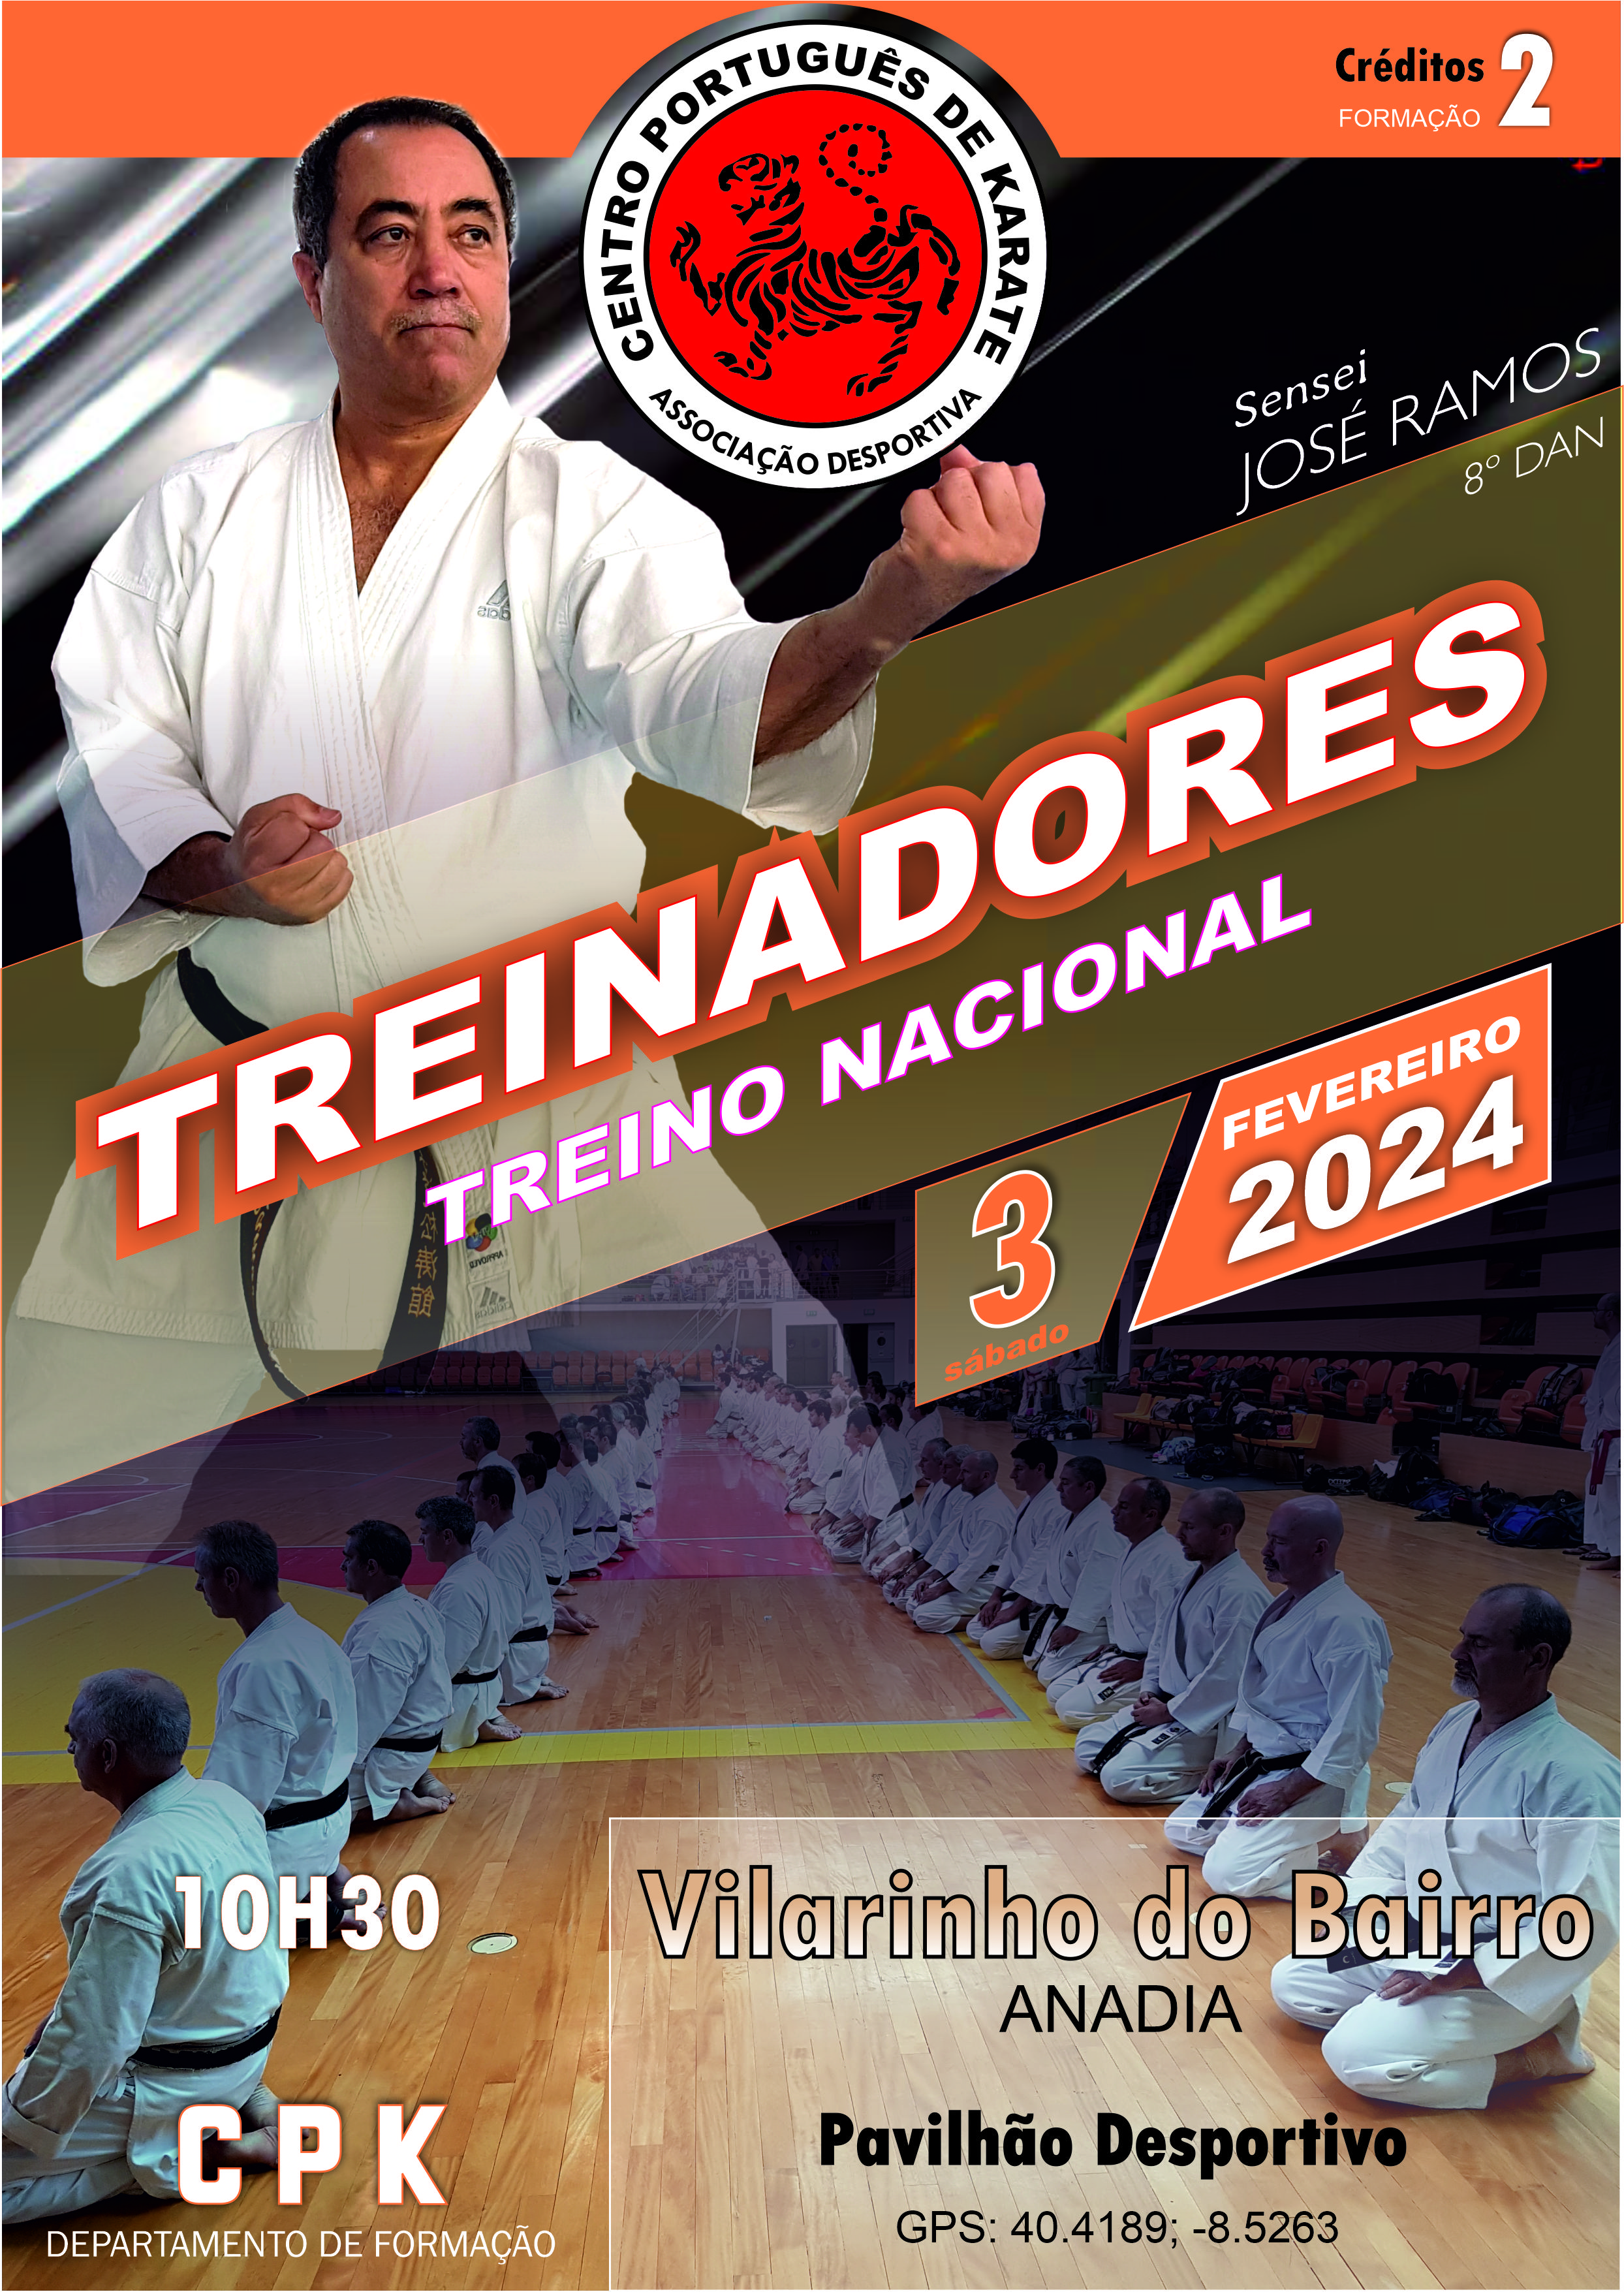 Treino Nacional Treinadores Fevereiro 2024